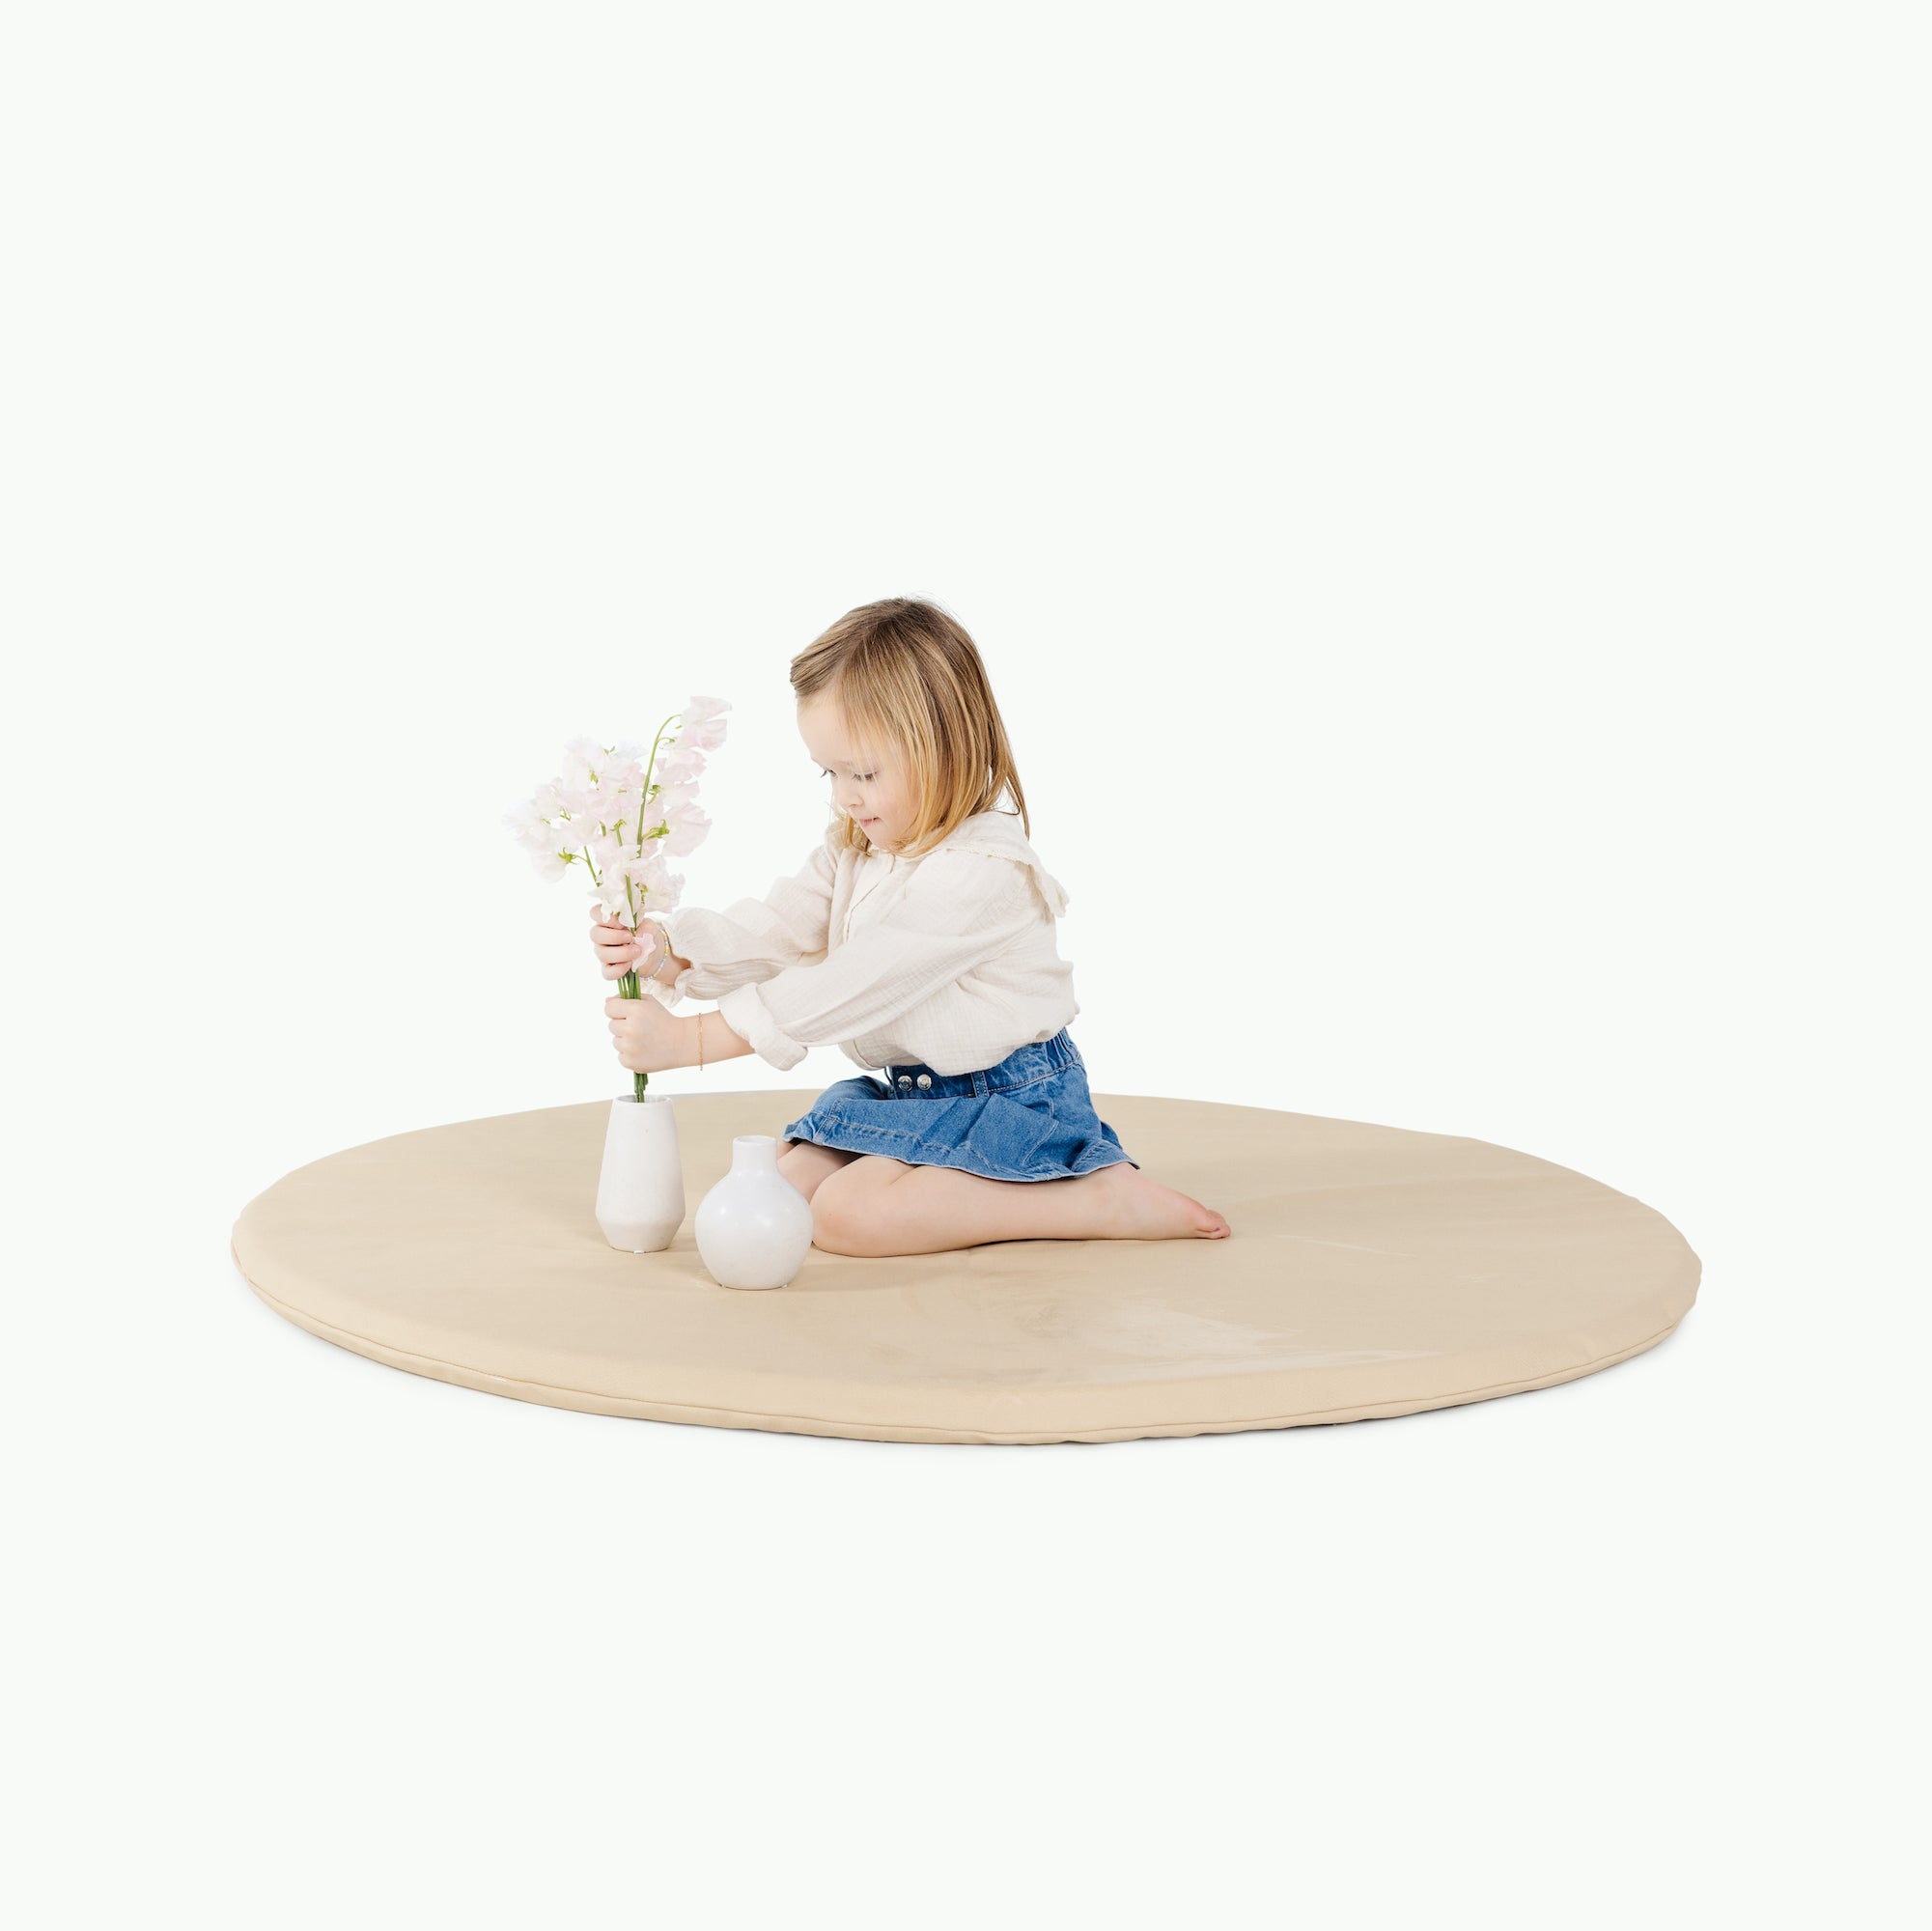 Créme@little girl playing on padded mat